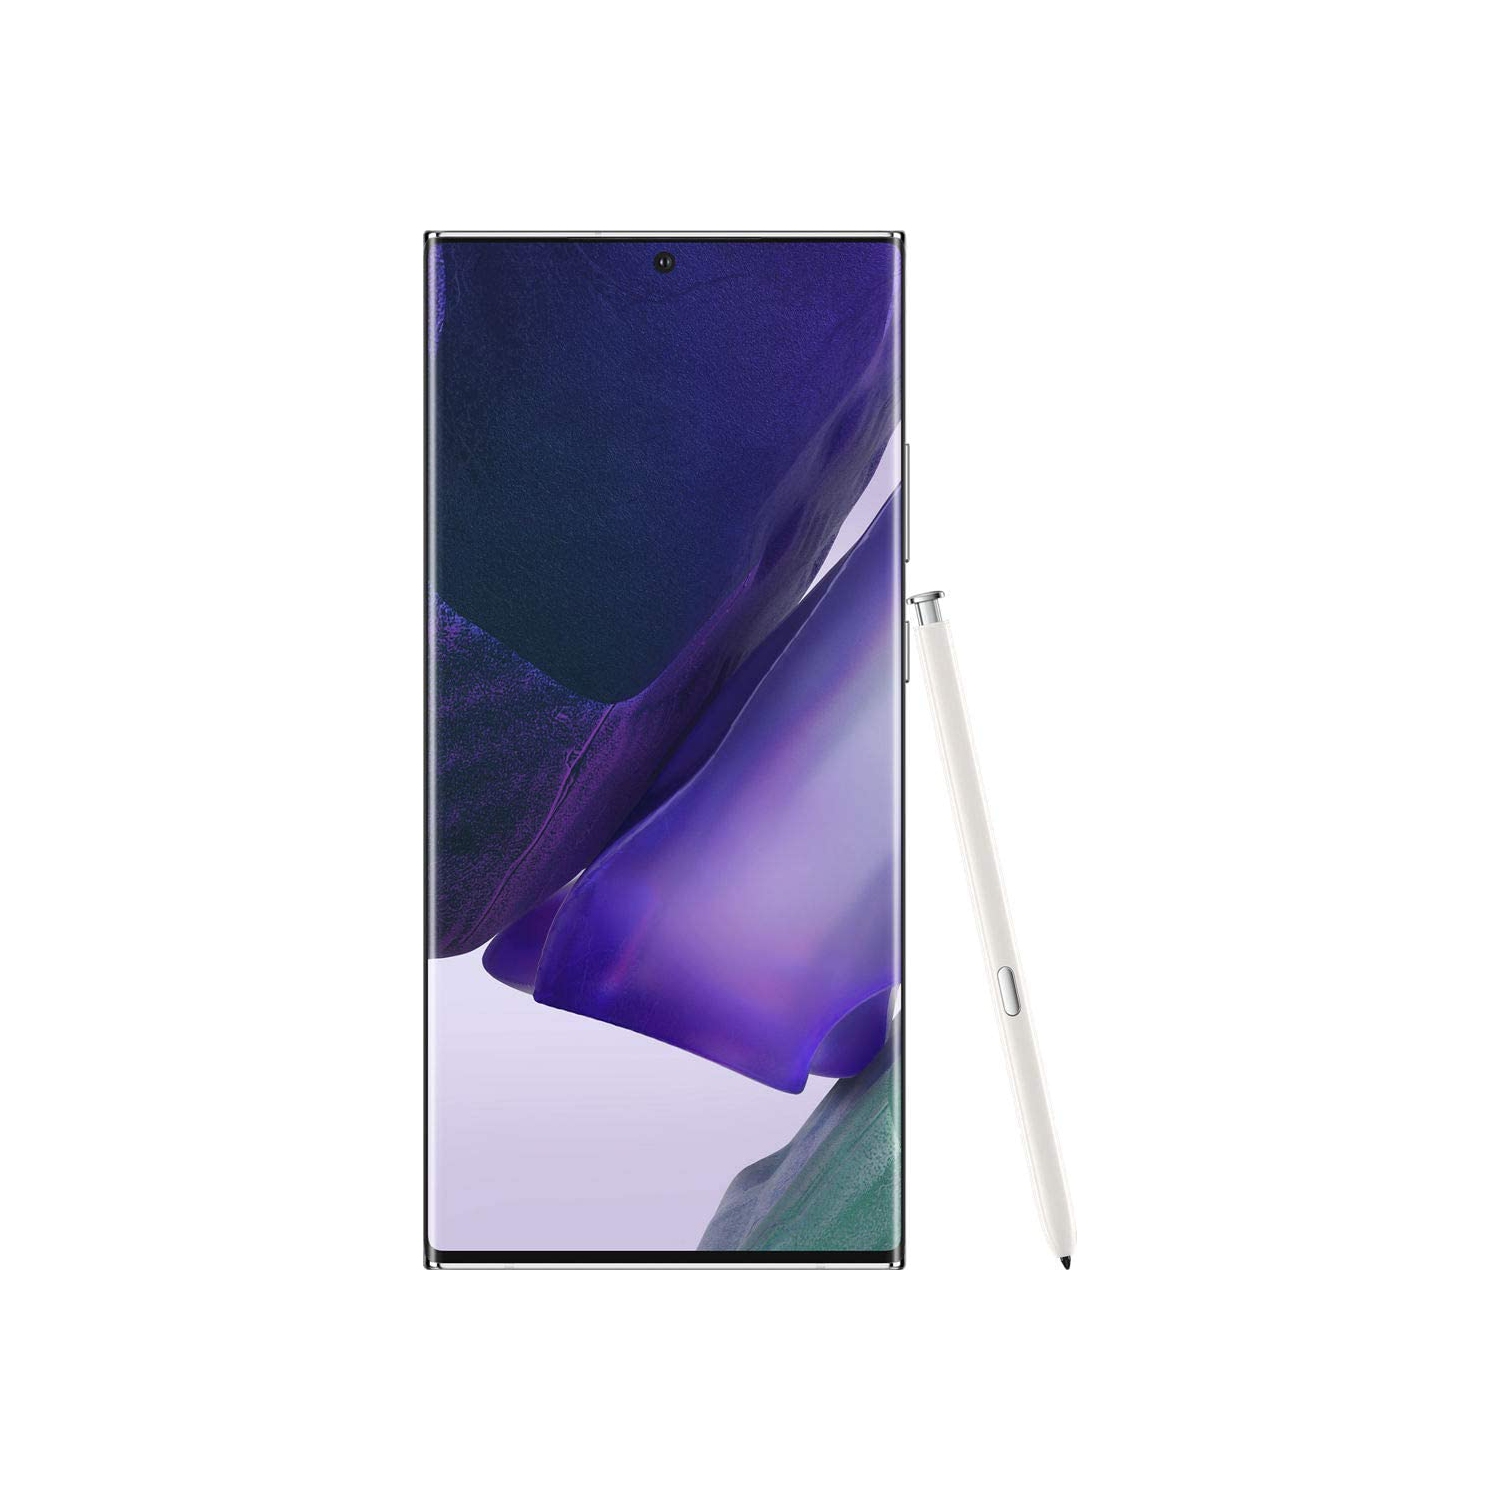 Refurbished (Excellent) - Samsung Galaxy Note 20 Ultra 256GB/8GB RAM (SM-N985F/DS) International Model - GSM Unlocked Smartphone - Mystic White - Certified Refurbished